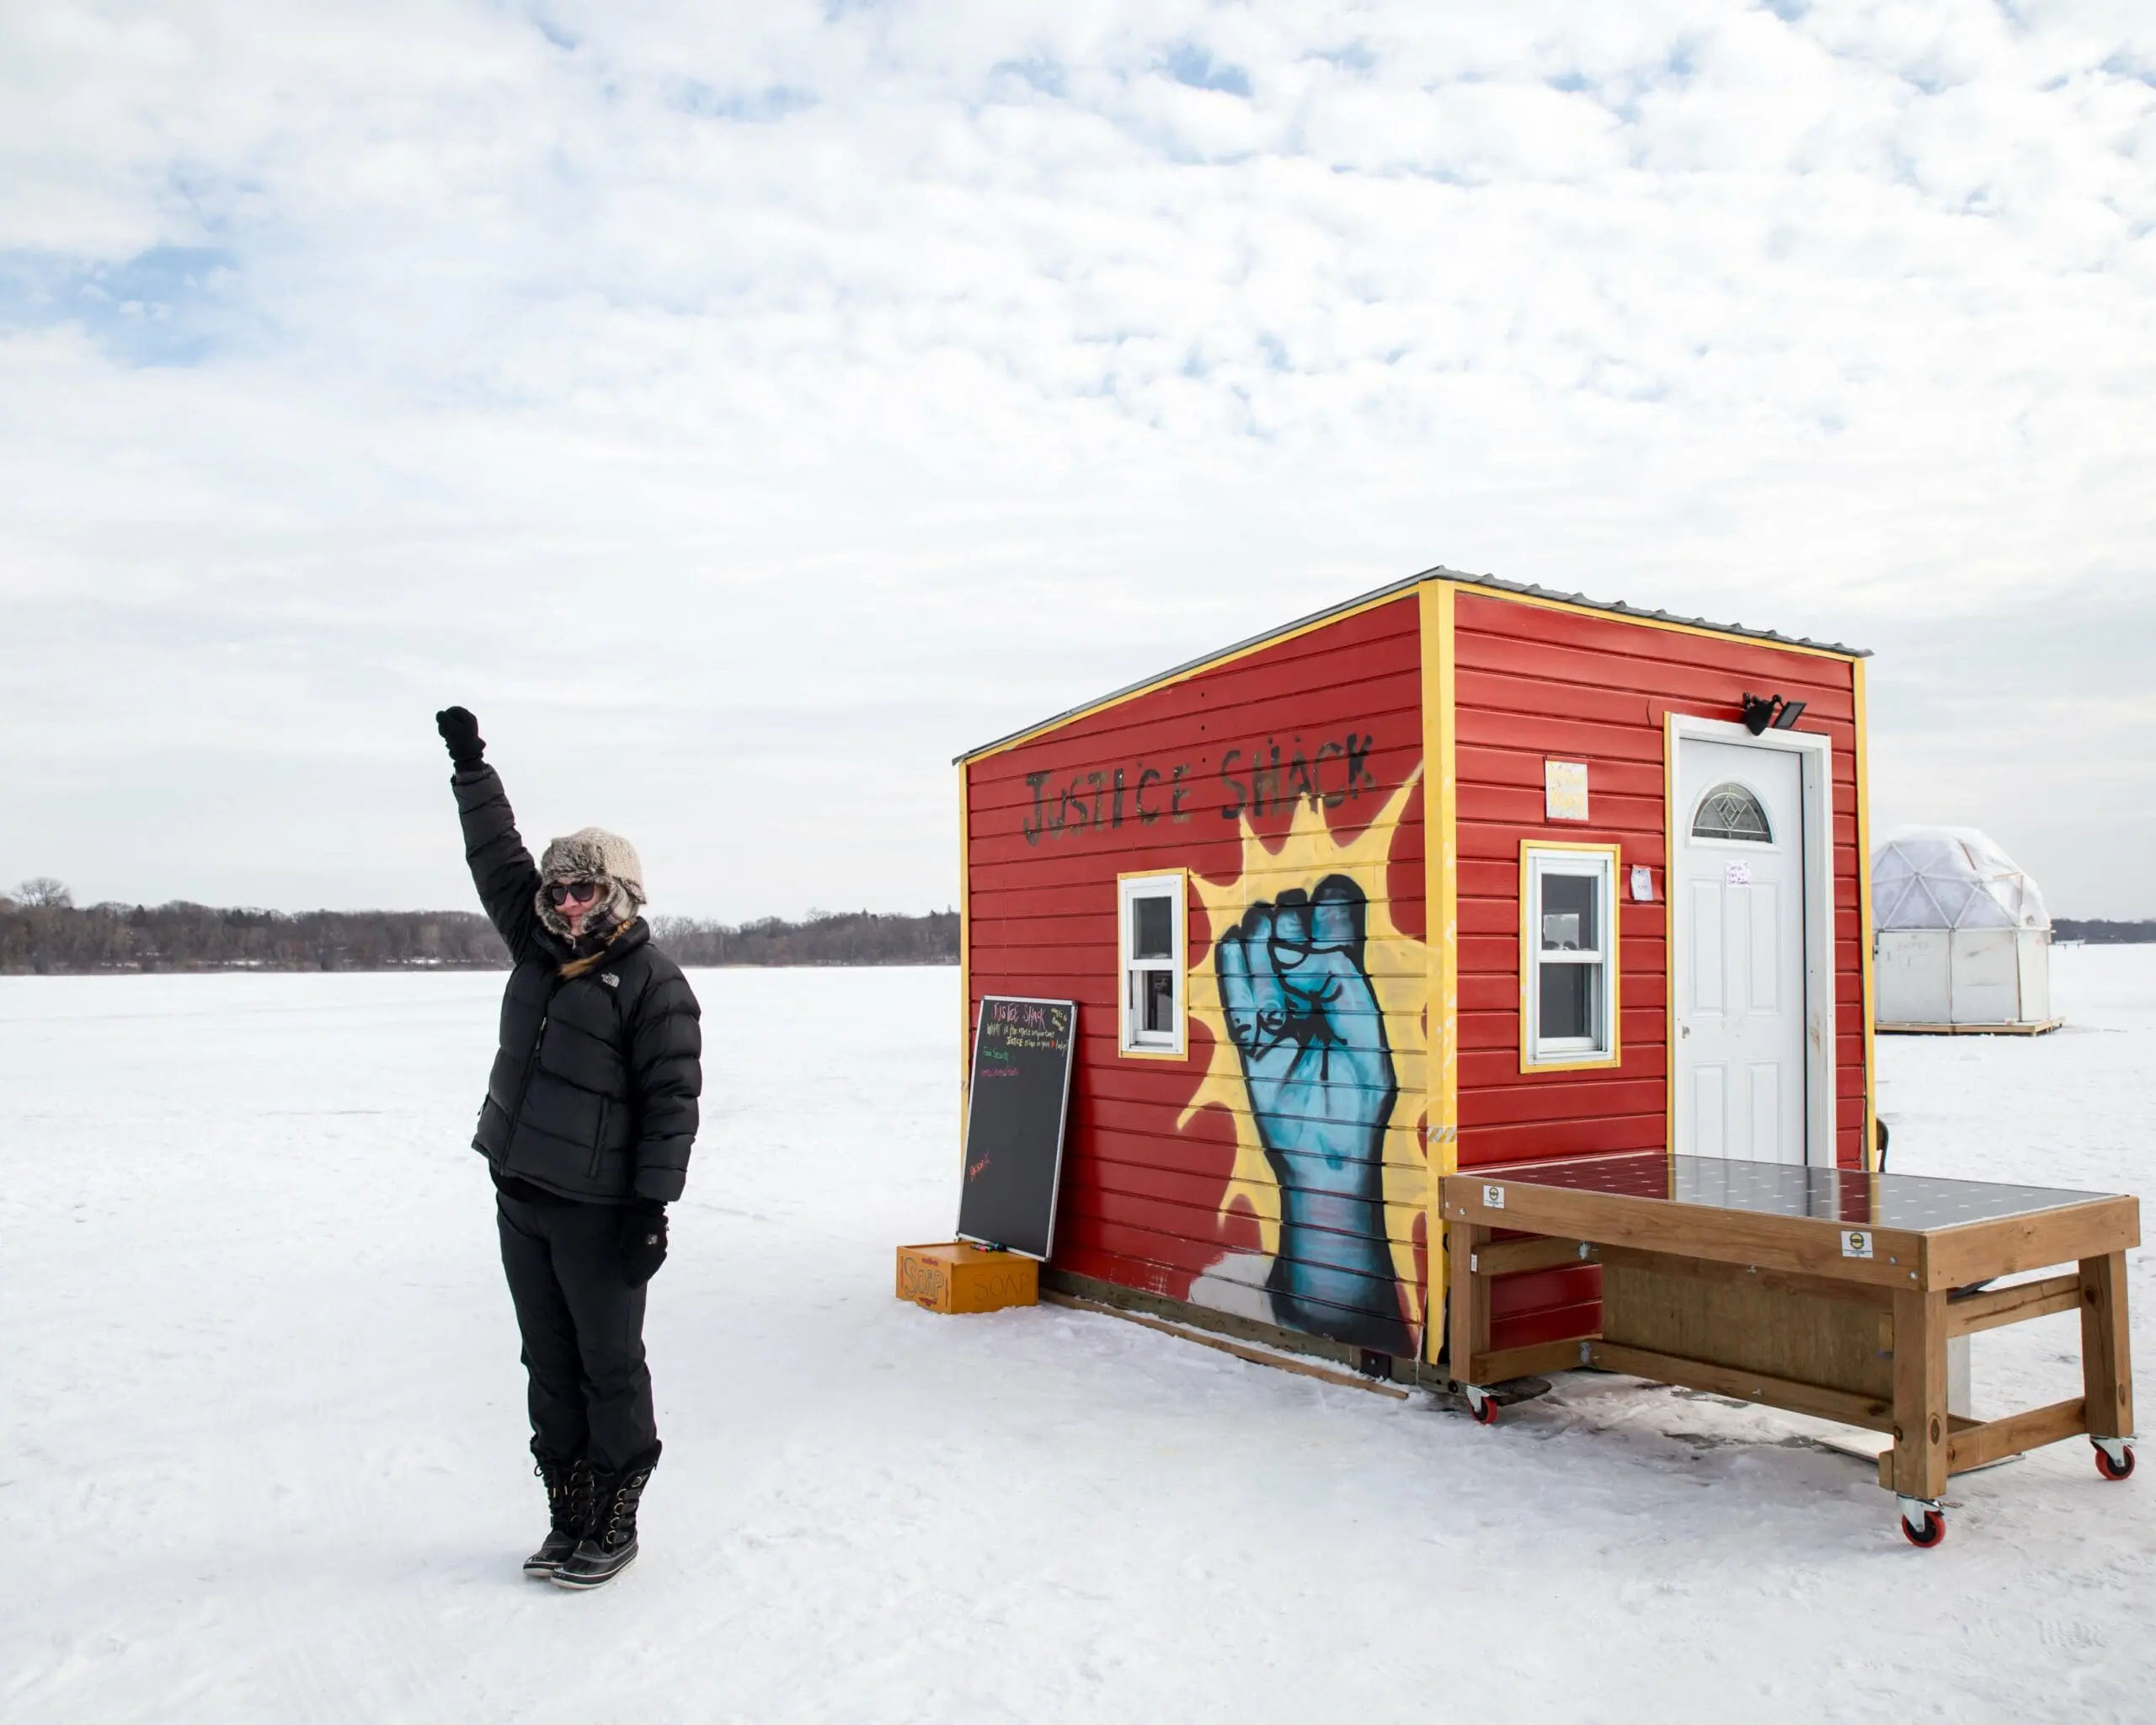 Justice Shack Minnesota Art Shanty Projects